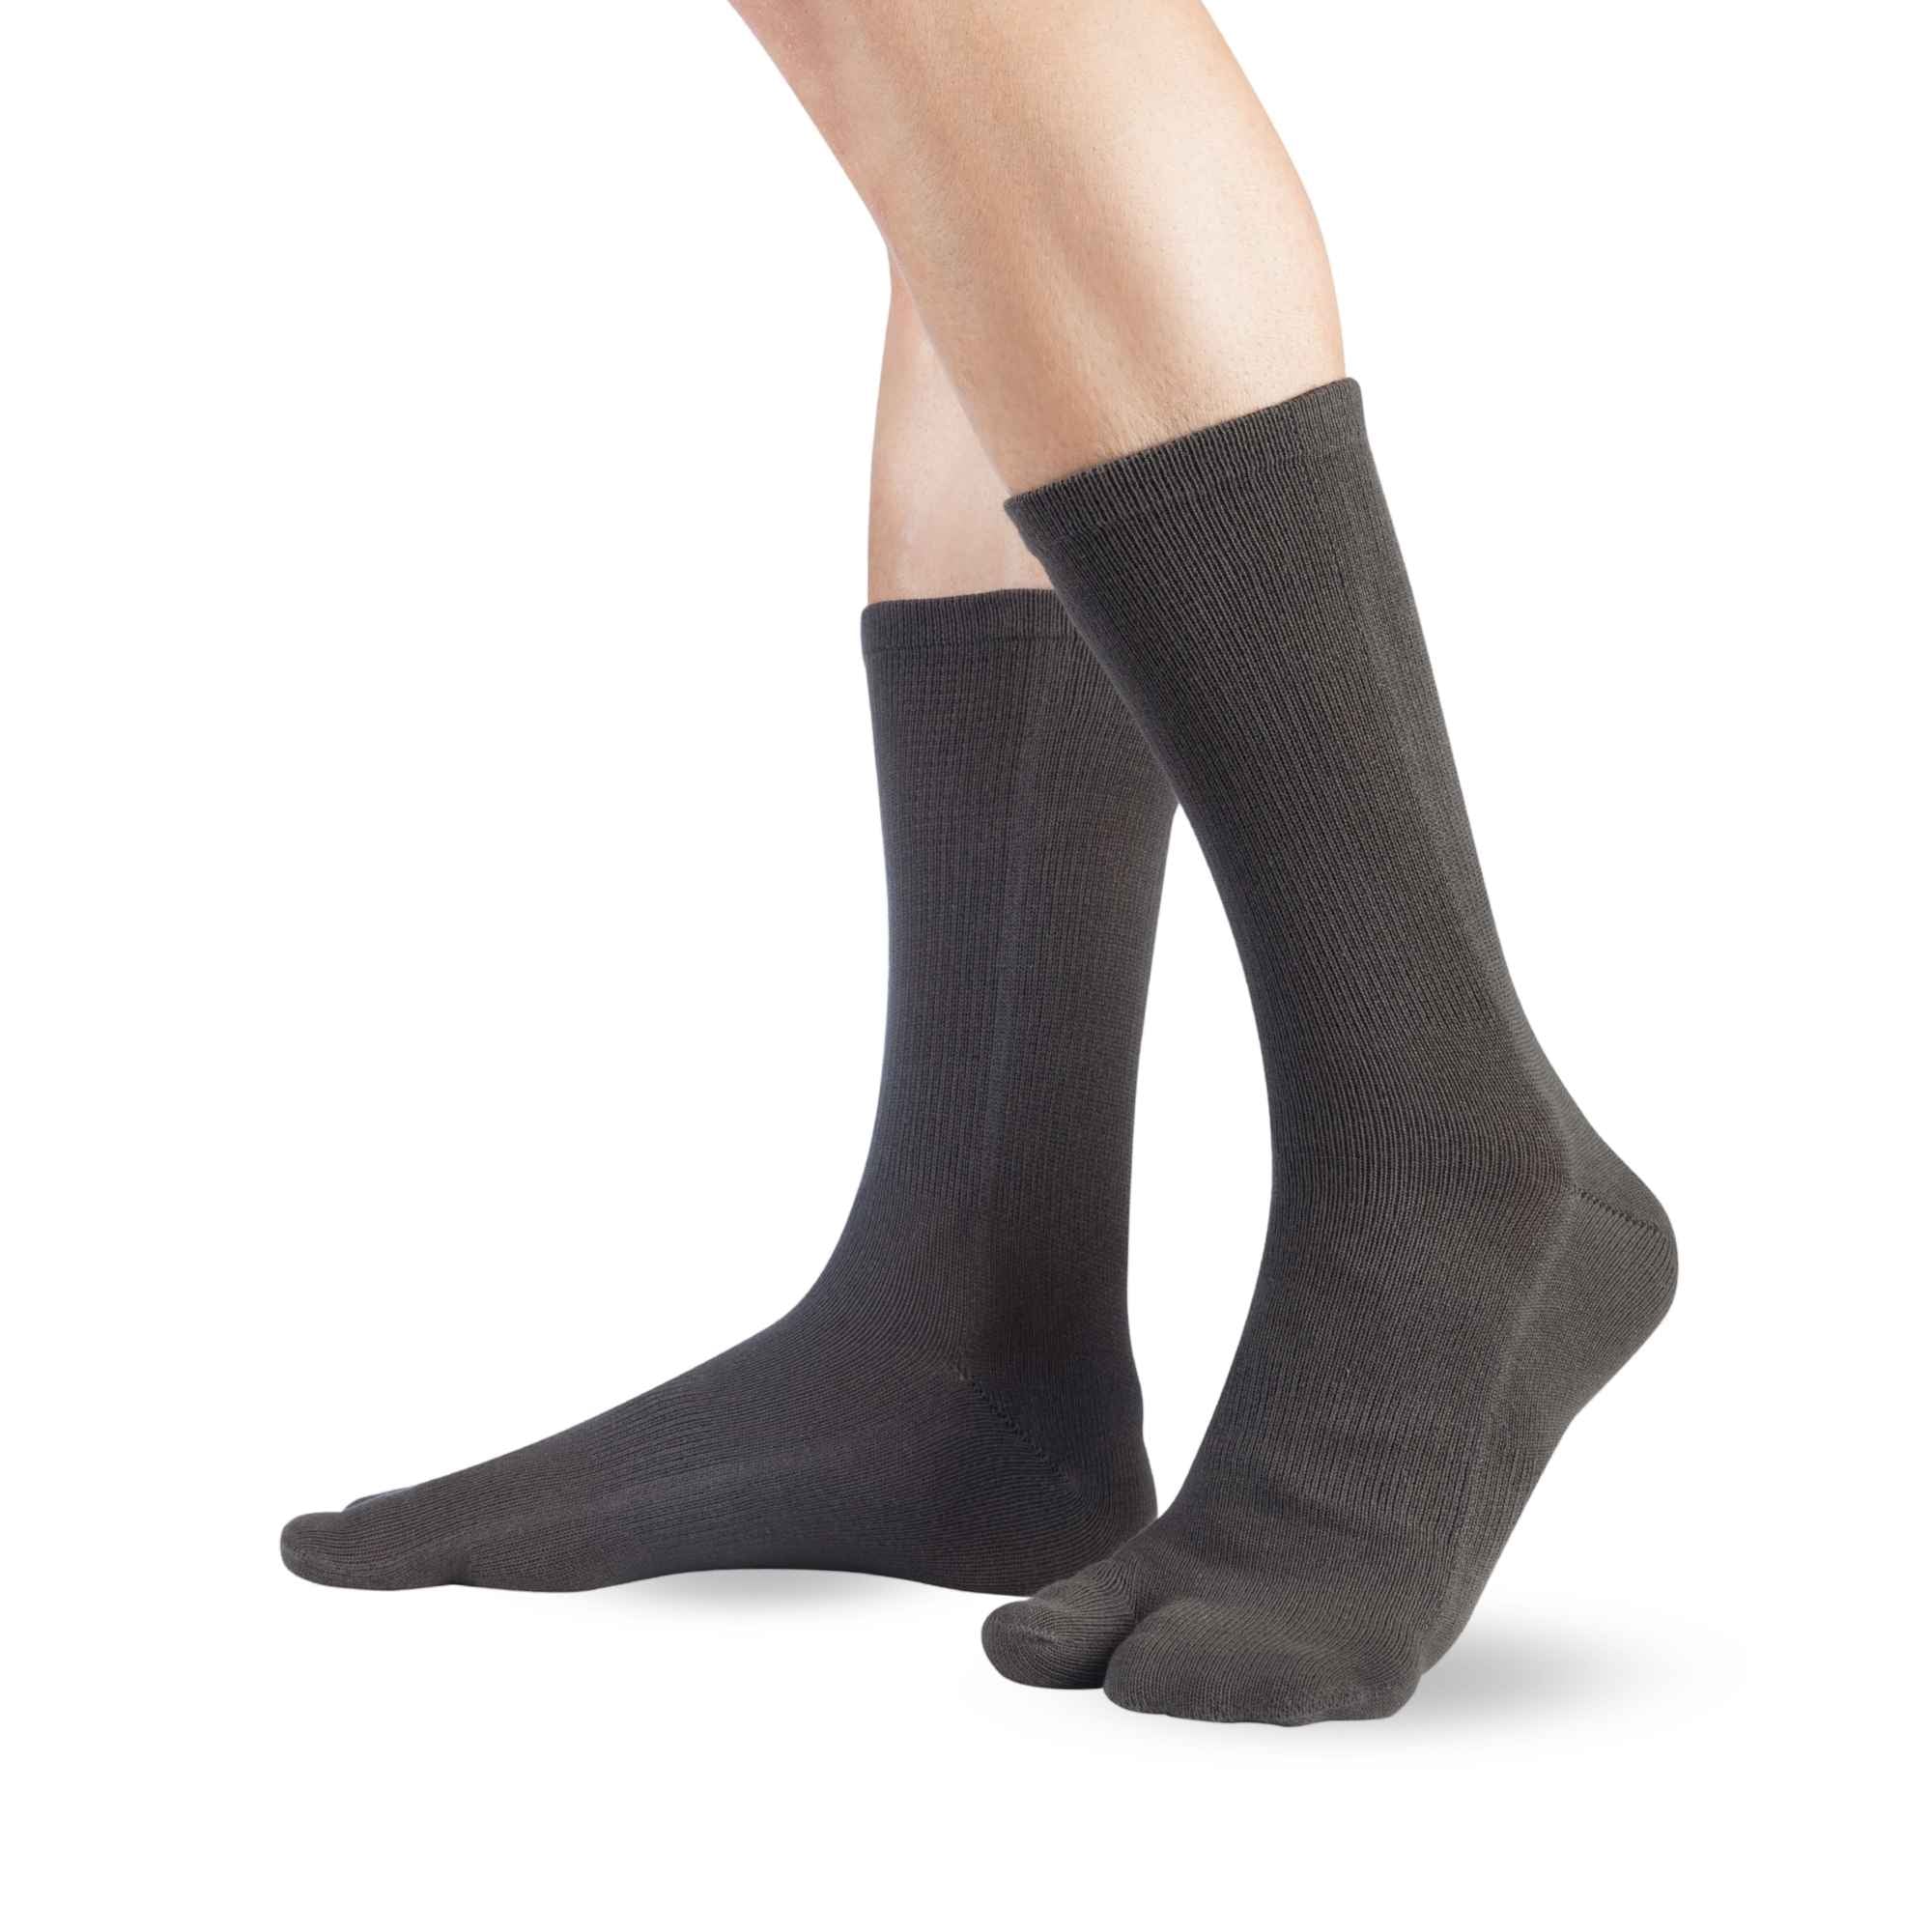 Tabi mid-calf, 3pcs economy pack - Knitido®. The toe socks